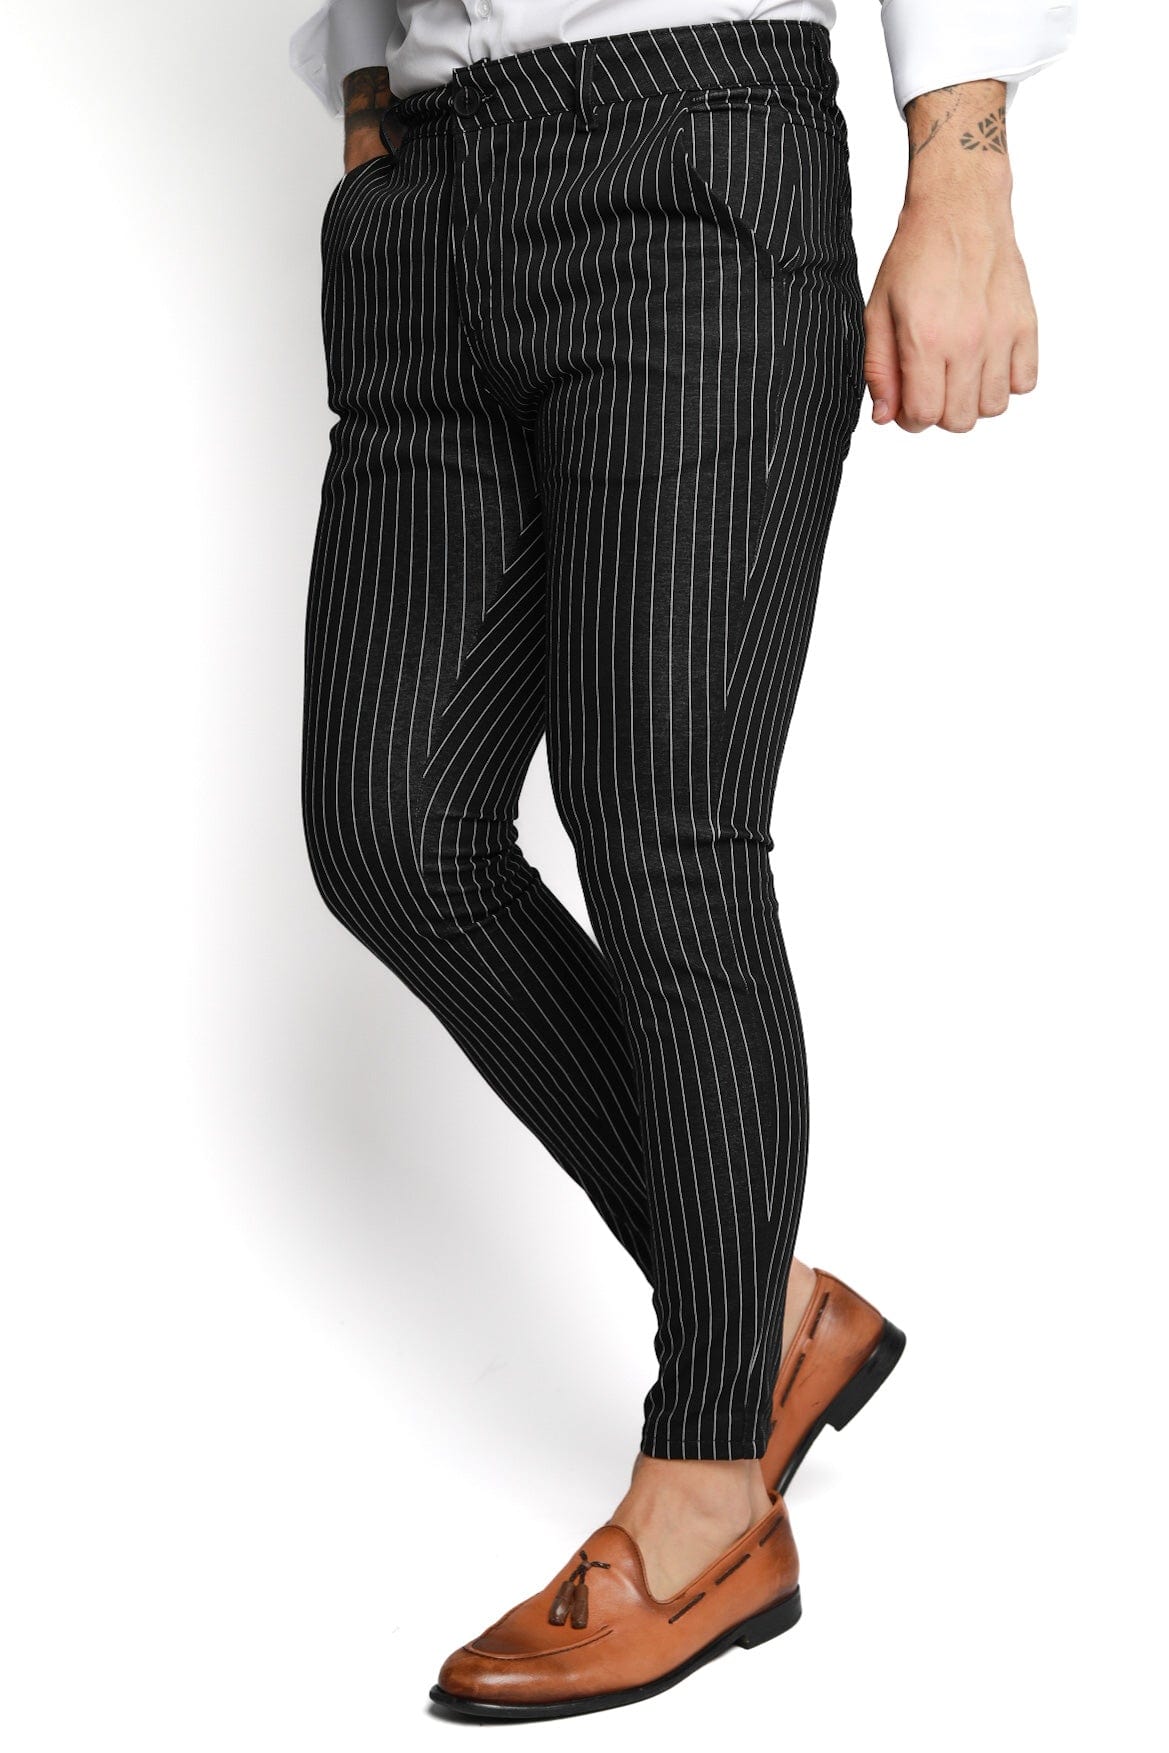 Buy FTX Men Loose Fit Black Formal Trouser (542_1)_28 at Amazon.in